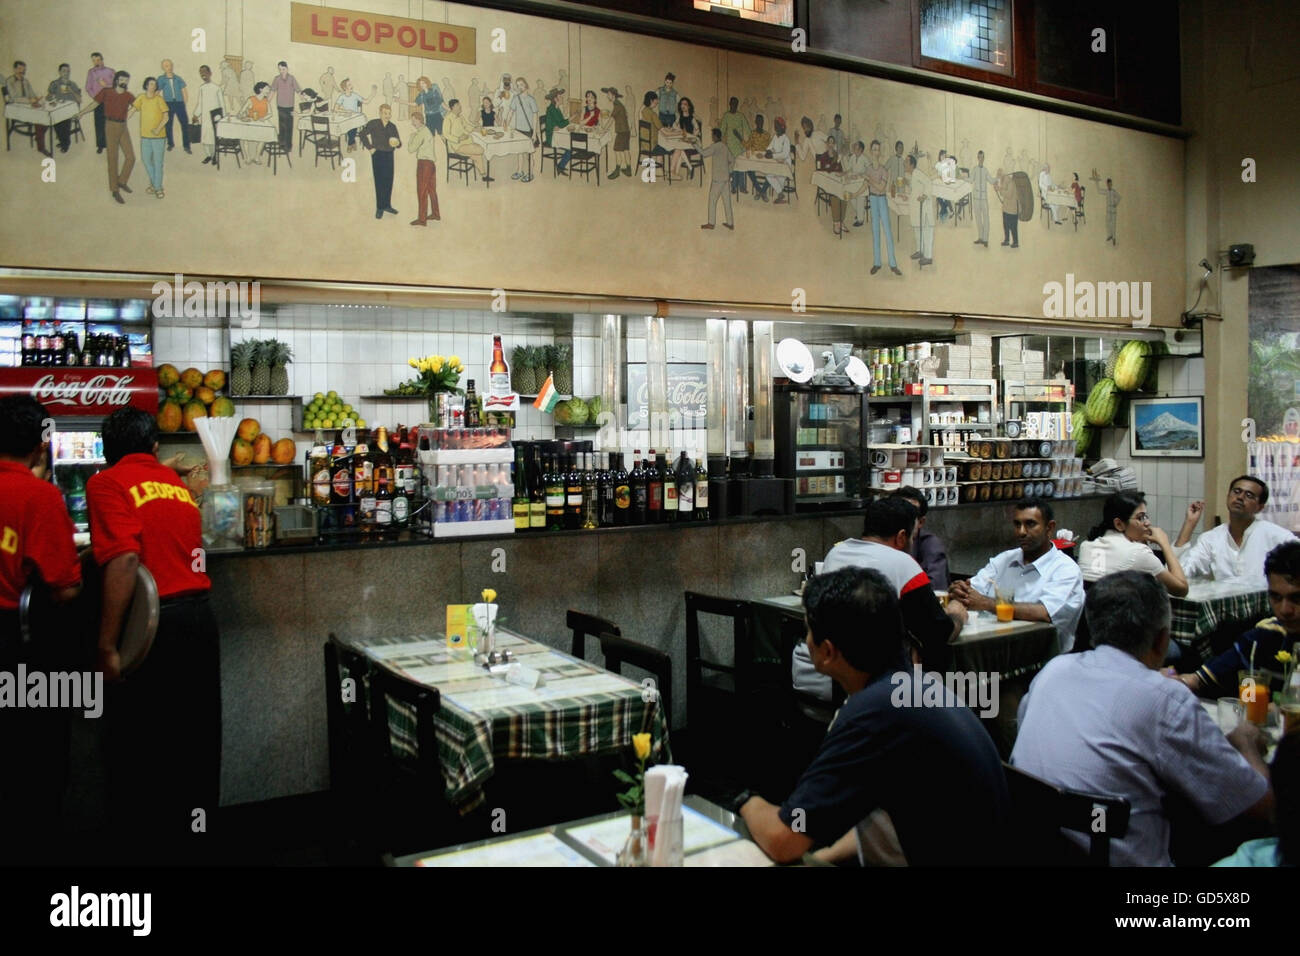 Leopold cafe mumbai hi-res stock photography and images - Alamy